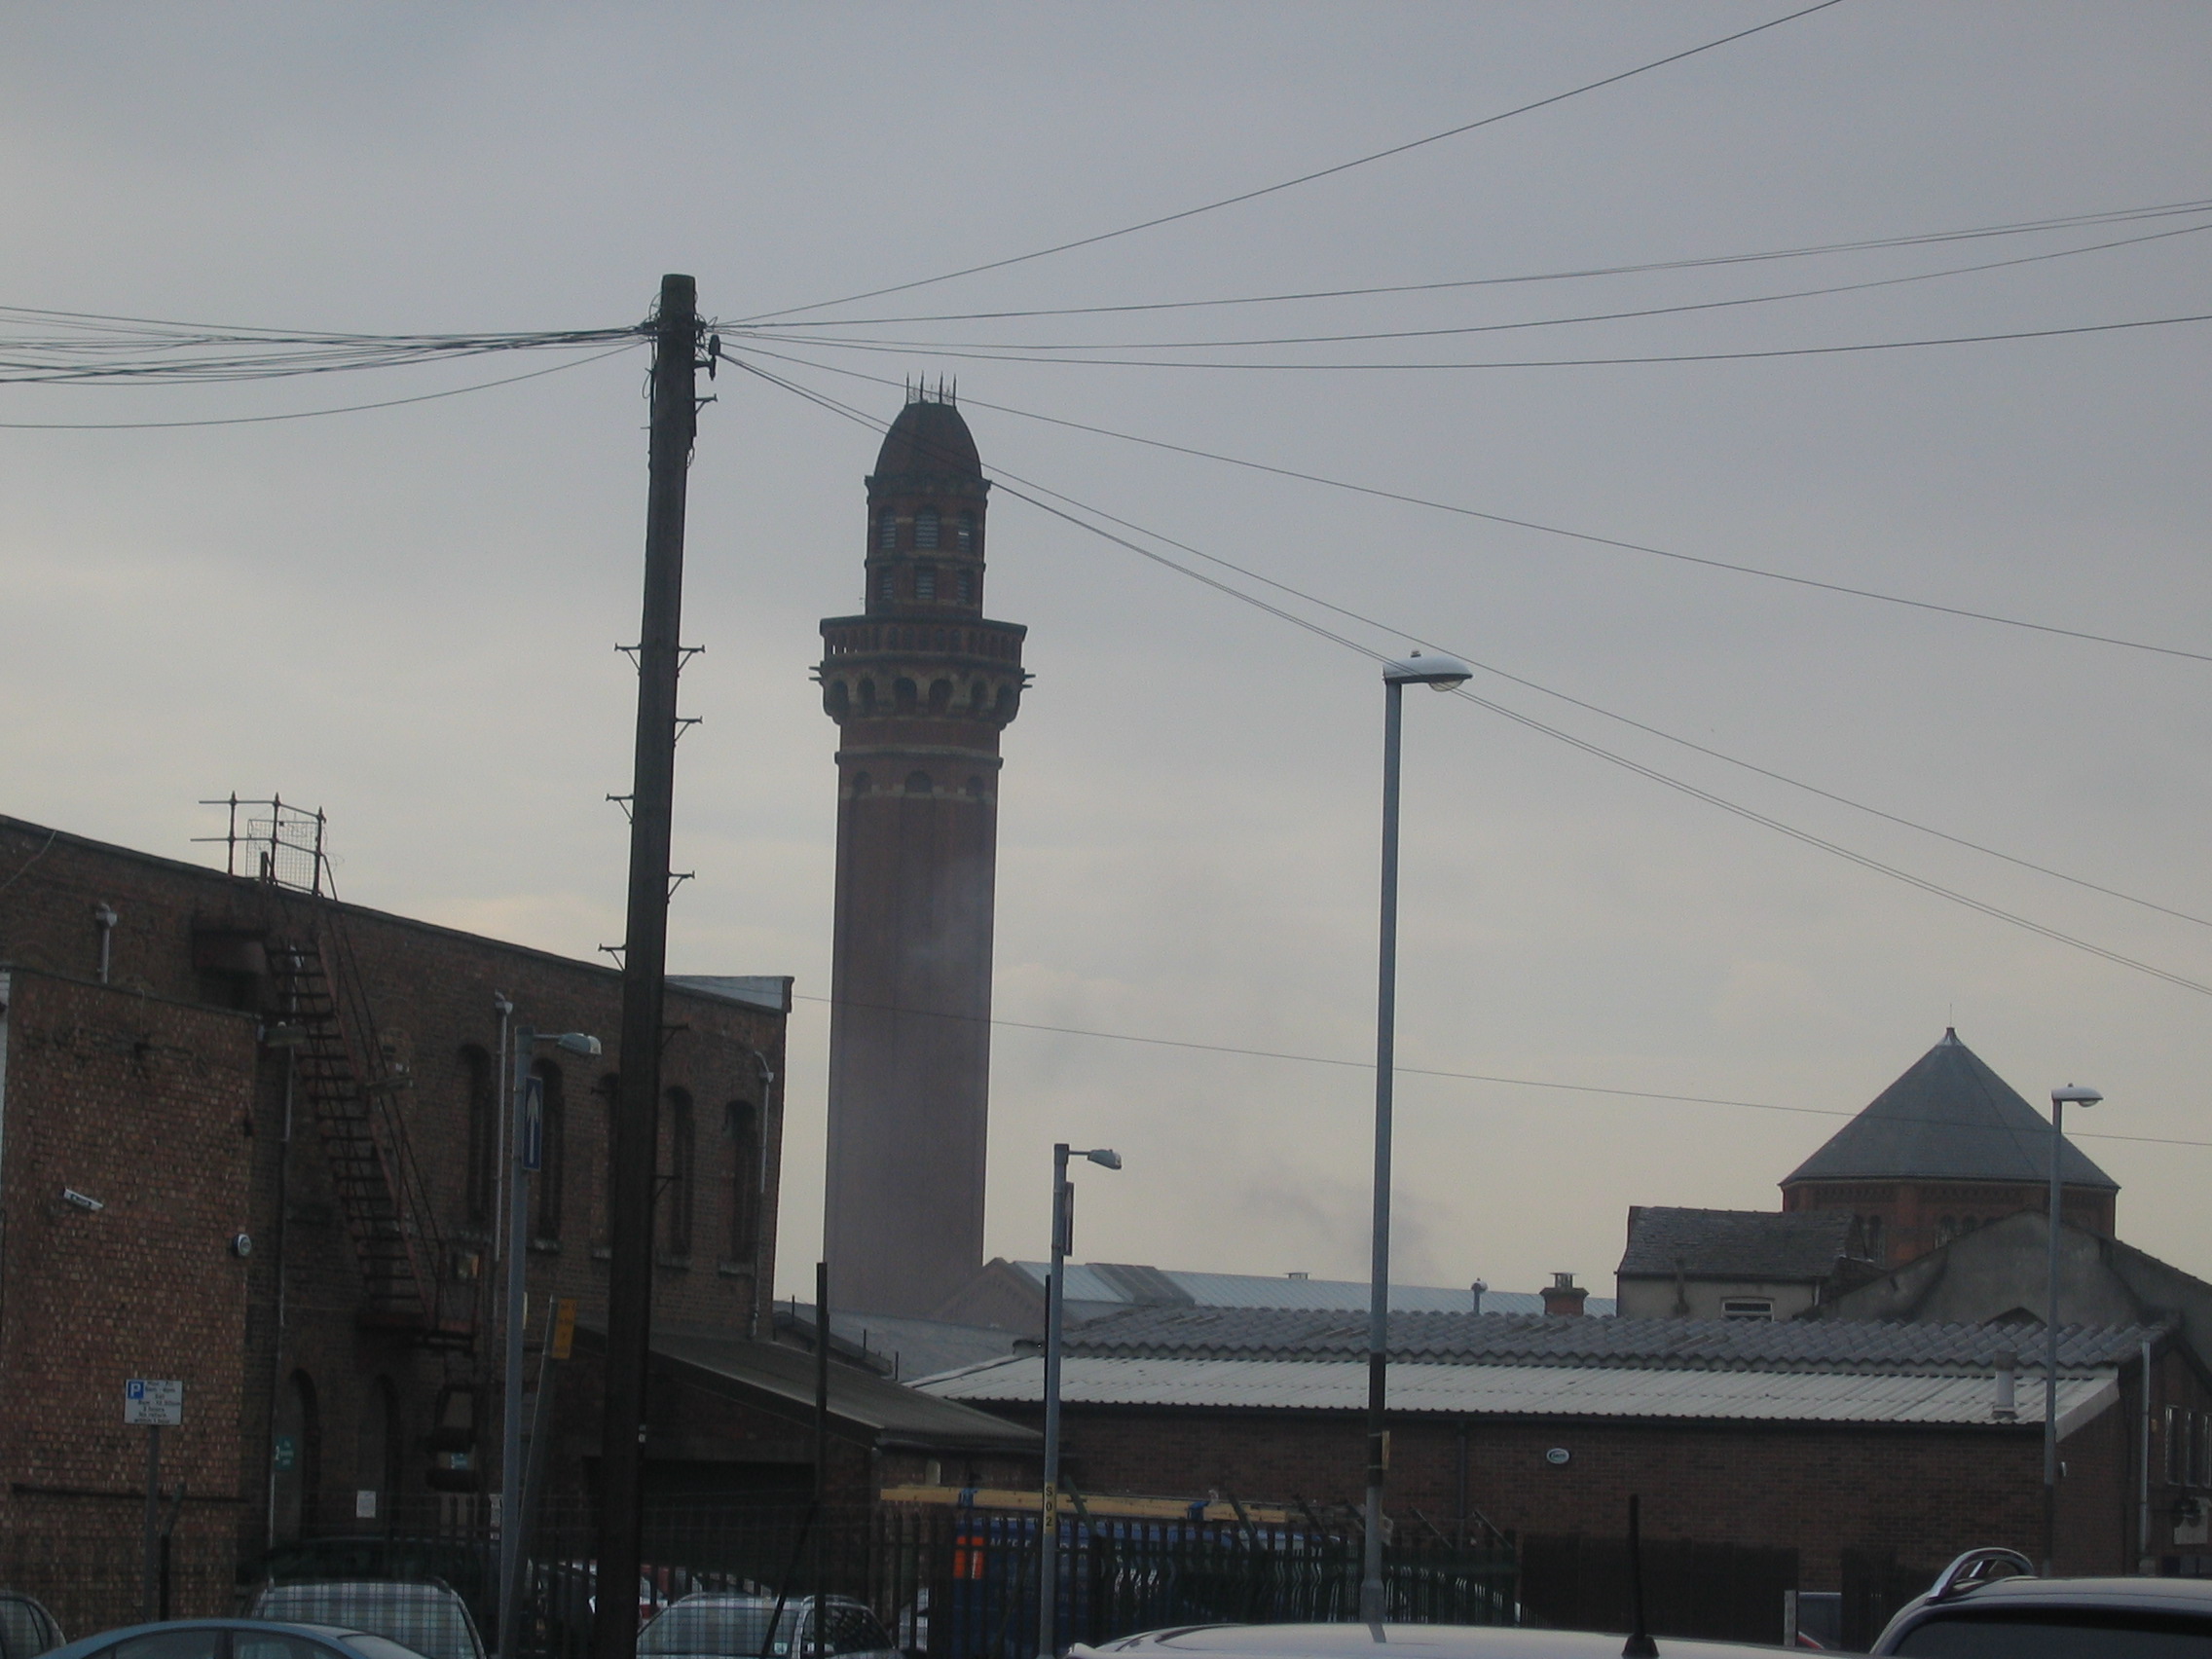 photo taken by me - Strangeways Prison, Manchester